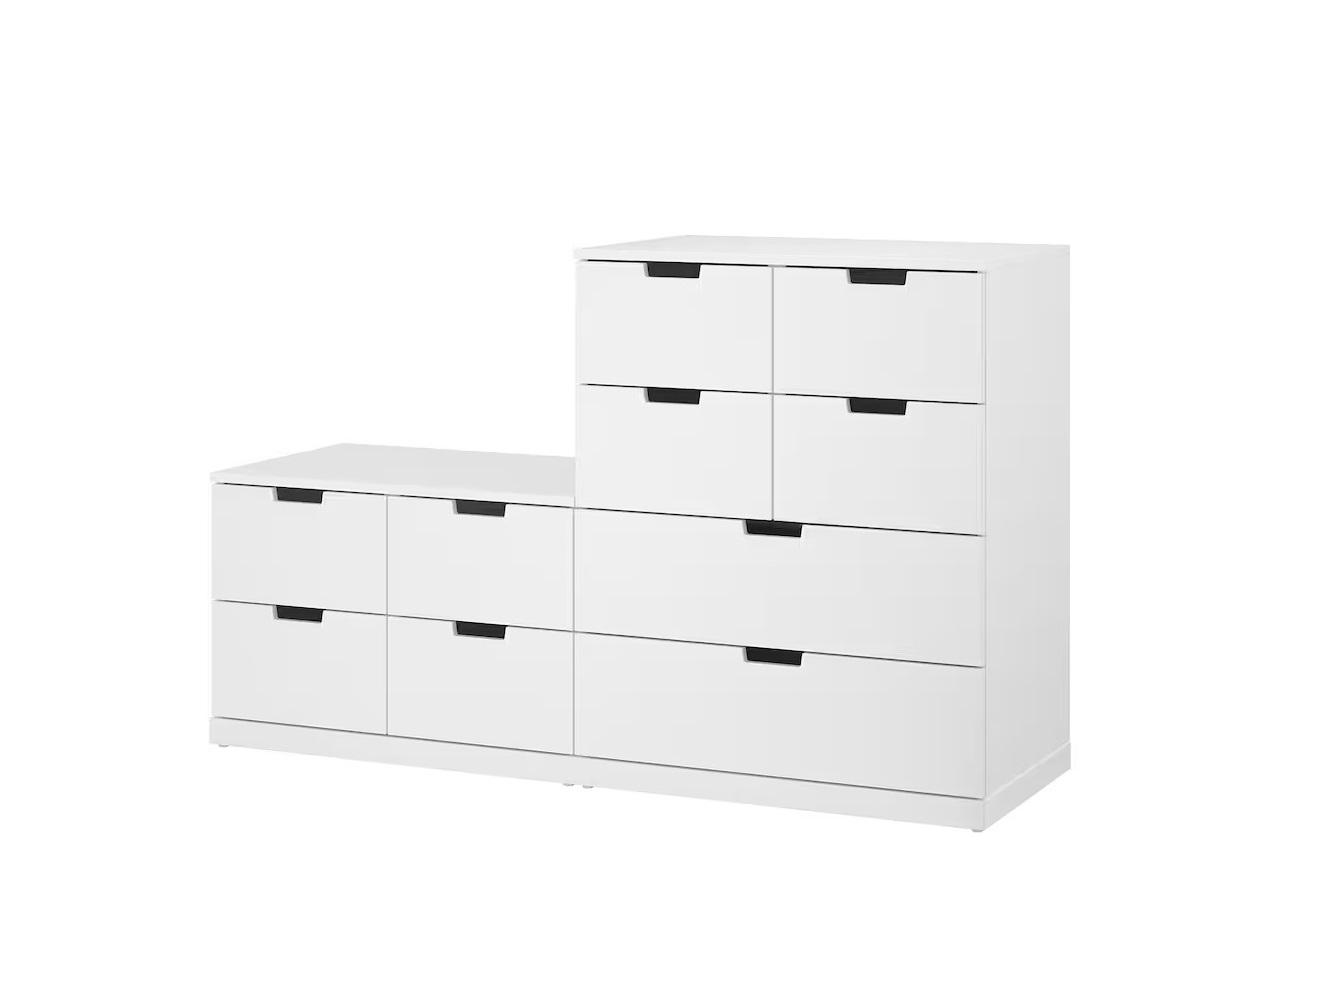 Изображение товара Комод Нордли 37 white ИКЕА (IKEA), 160x45x100 см на сайте adeta.ru